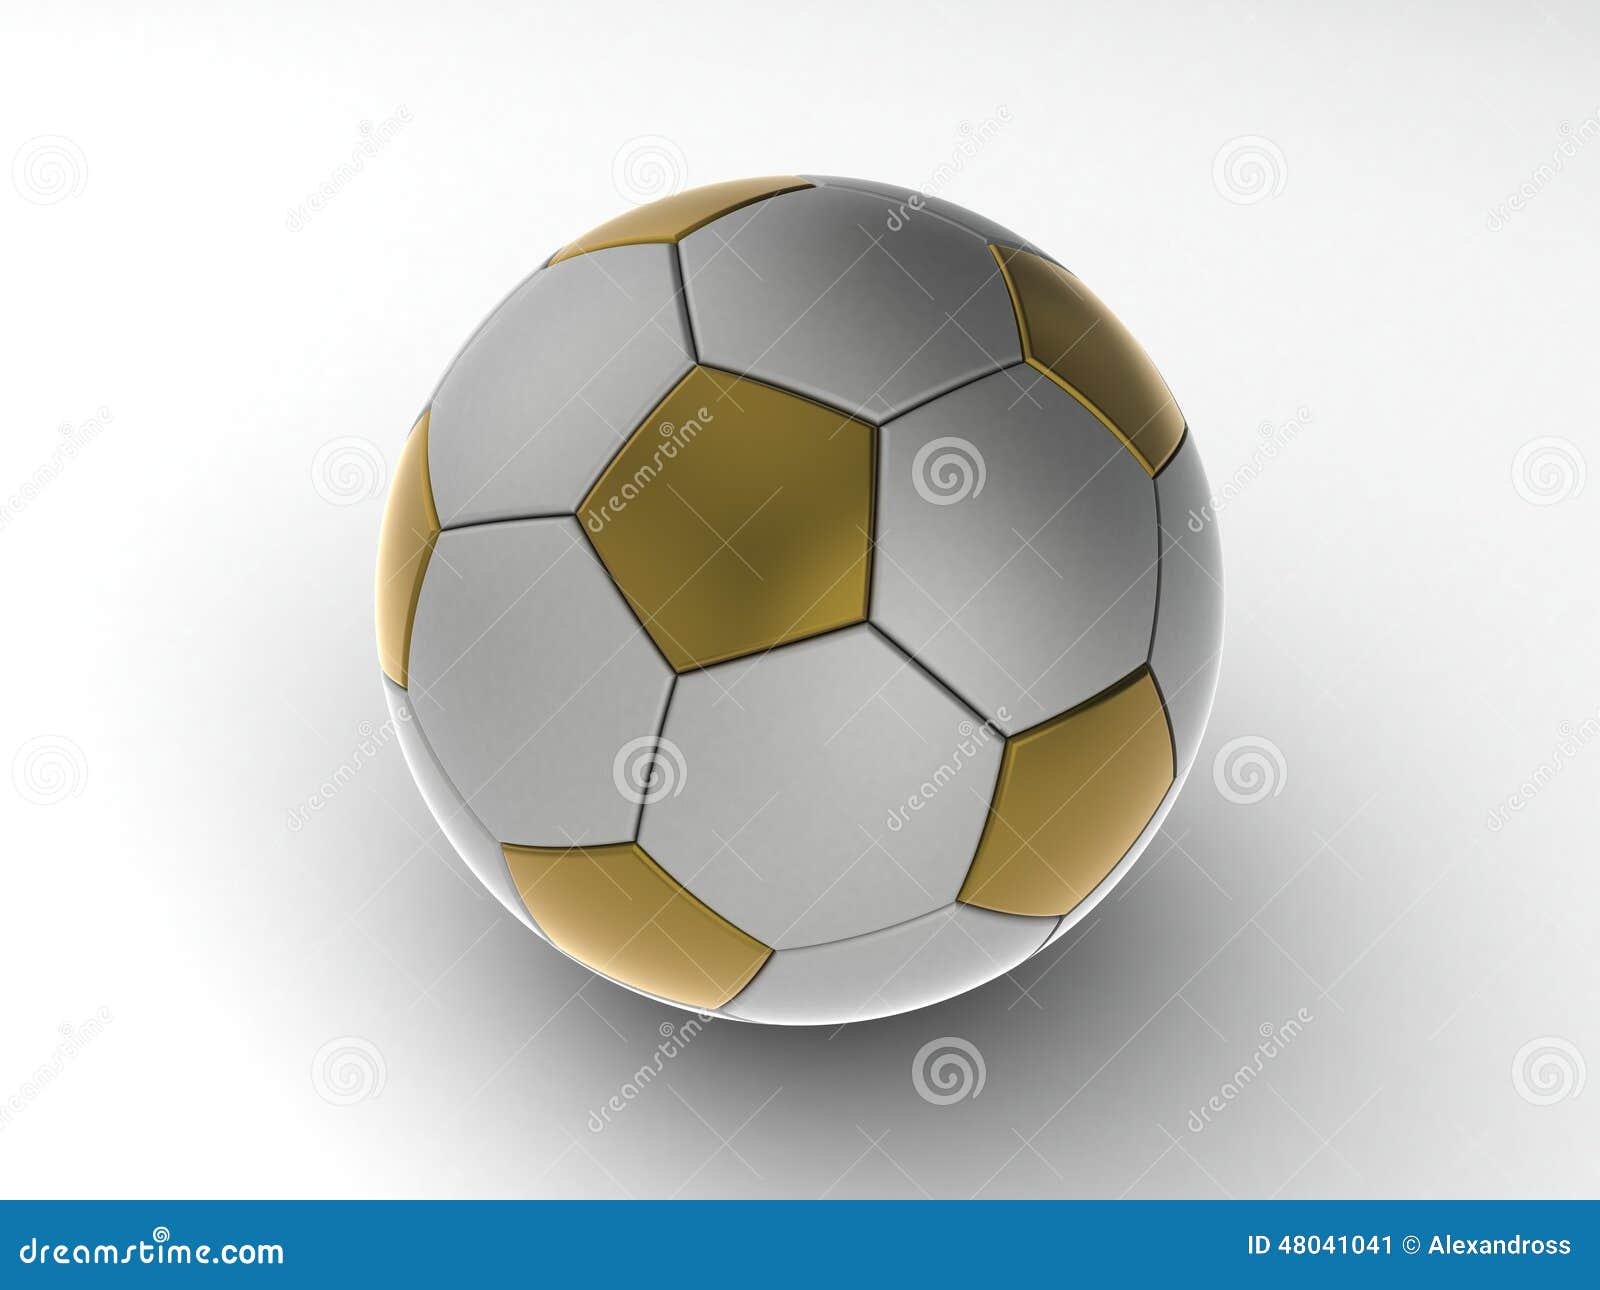 Ball, soccer ball stock illustration. Illustration of equipment - 48041041